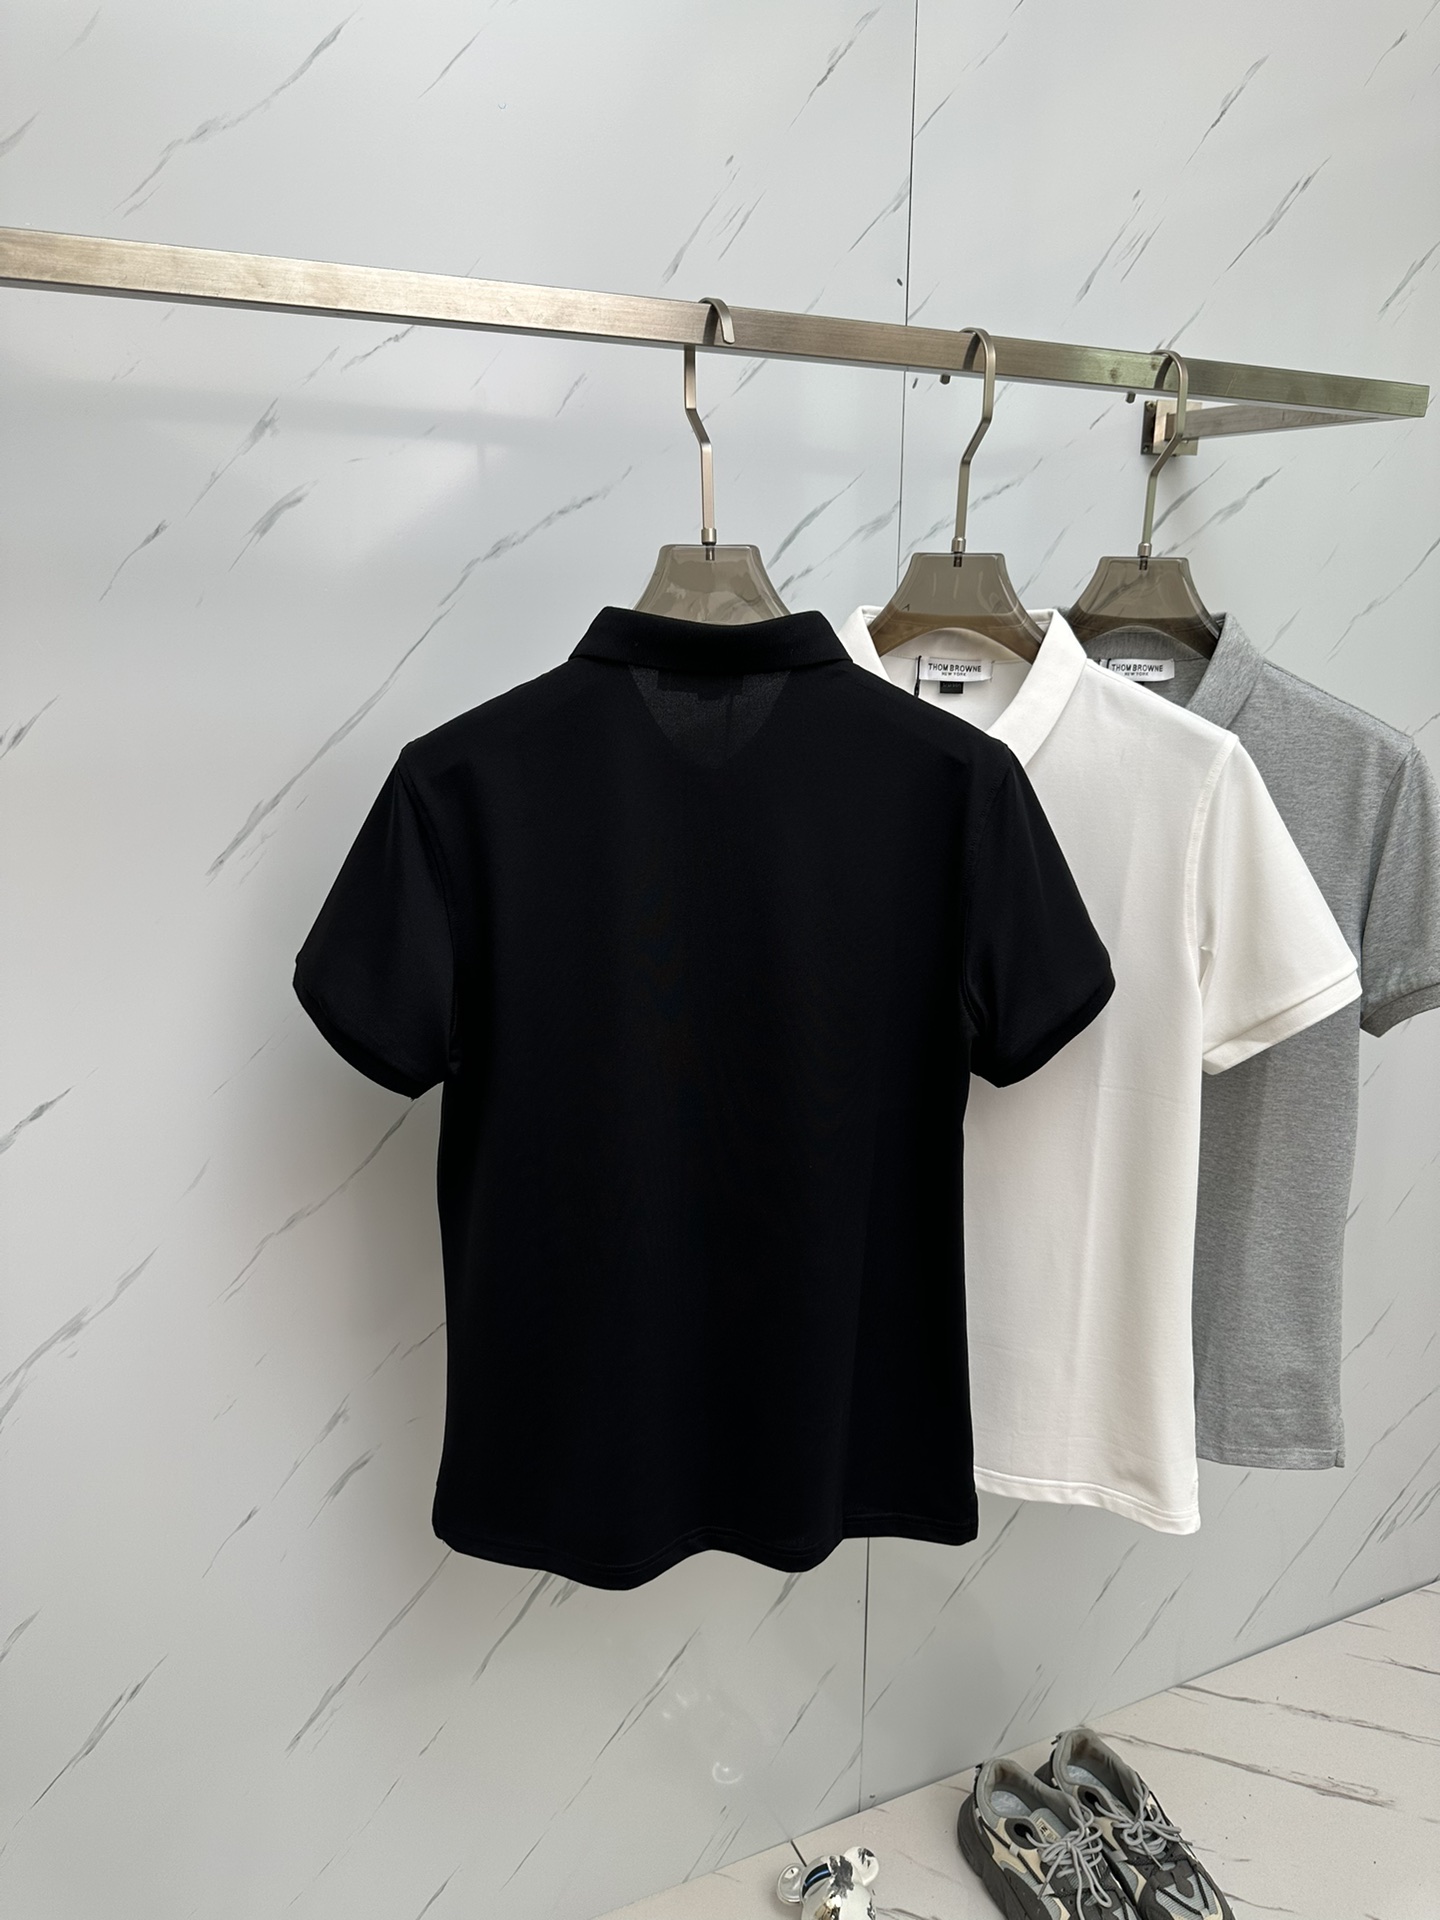 TB最新最顶级版本Polo衫短袖最顶级的品质.玉蚕丝顶级制作工艺进口面料专柜款独特设计采用进口高端订制进